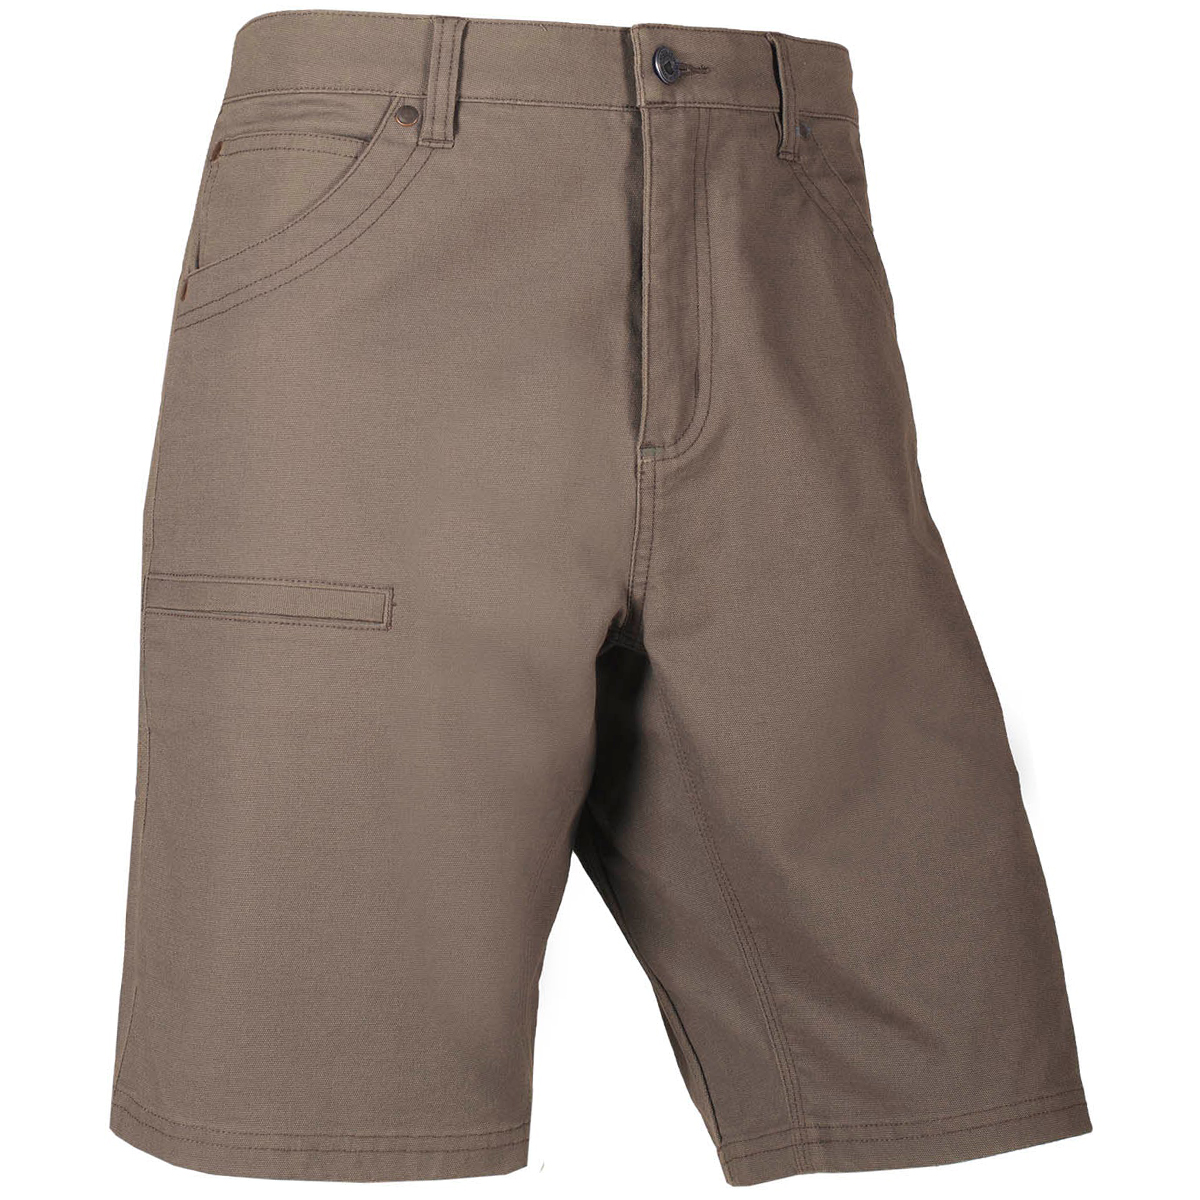 Mountain Khakis Men’s Camber Original Shorts – Size 38